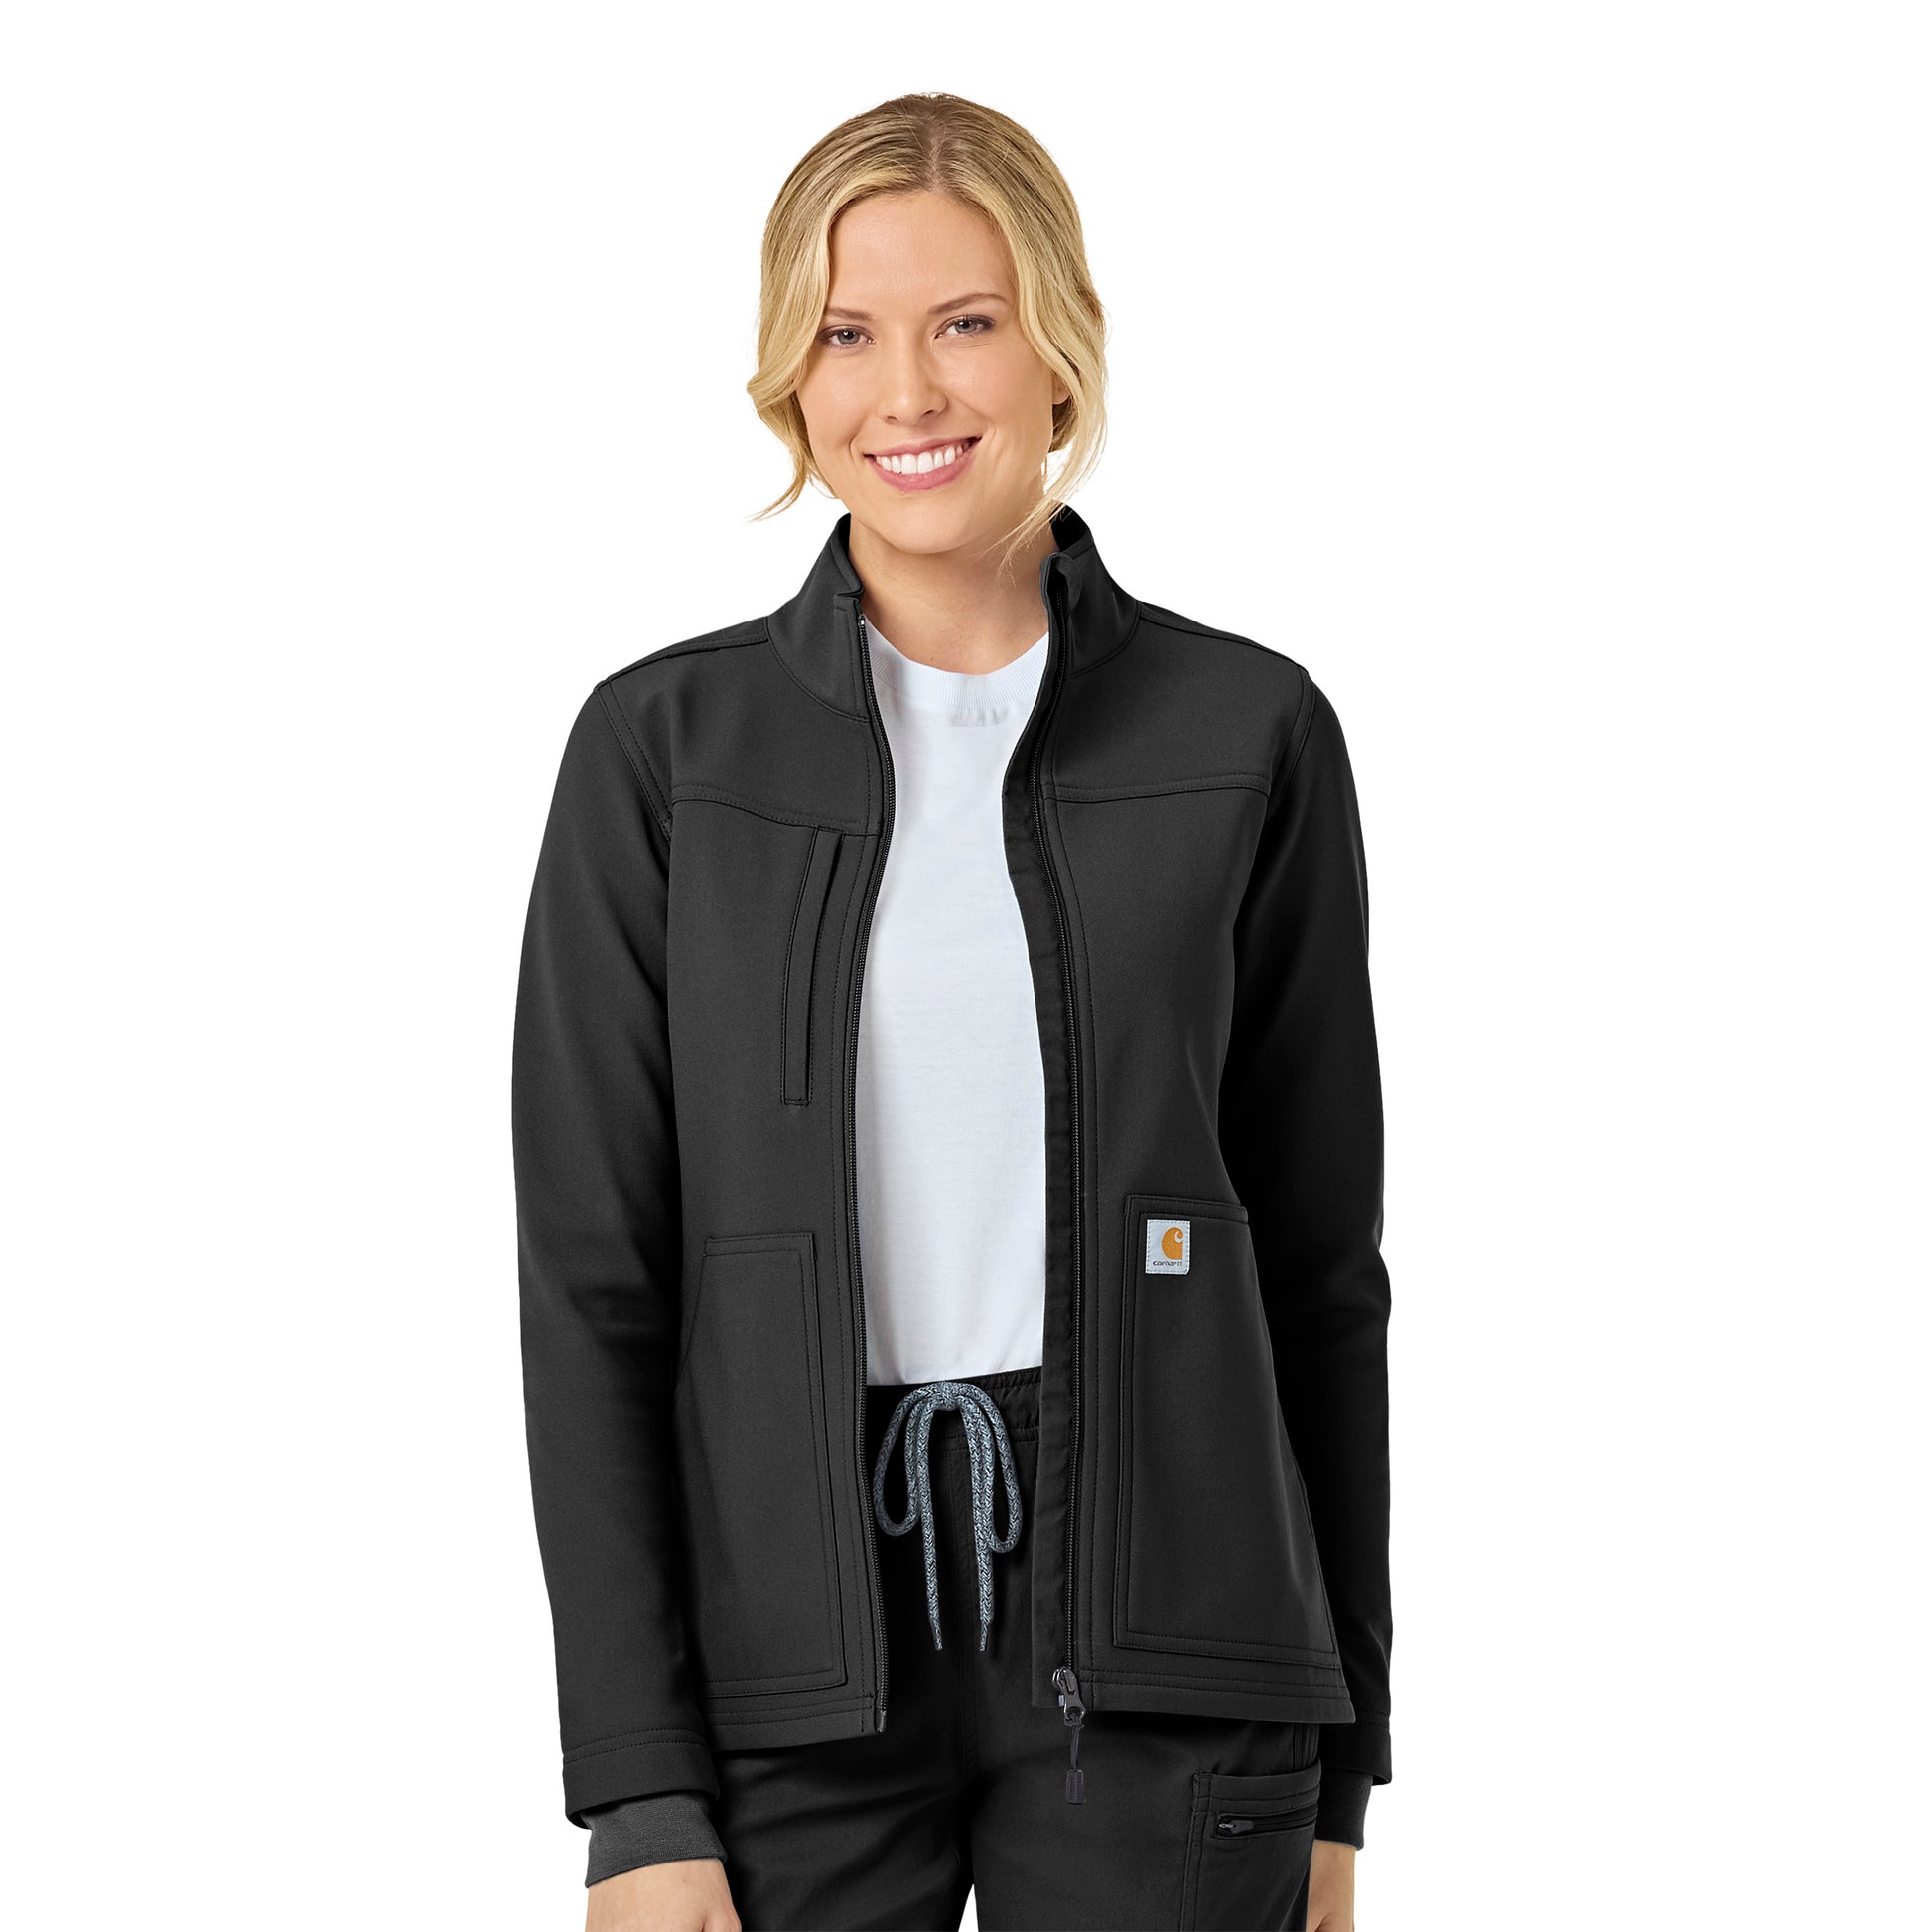 Carhartt C81023 Women's Rugged Flex Fleece Jacket - Black